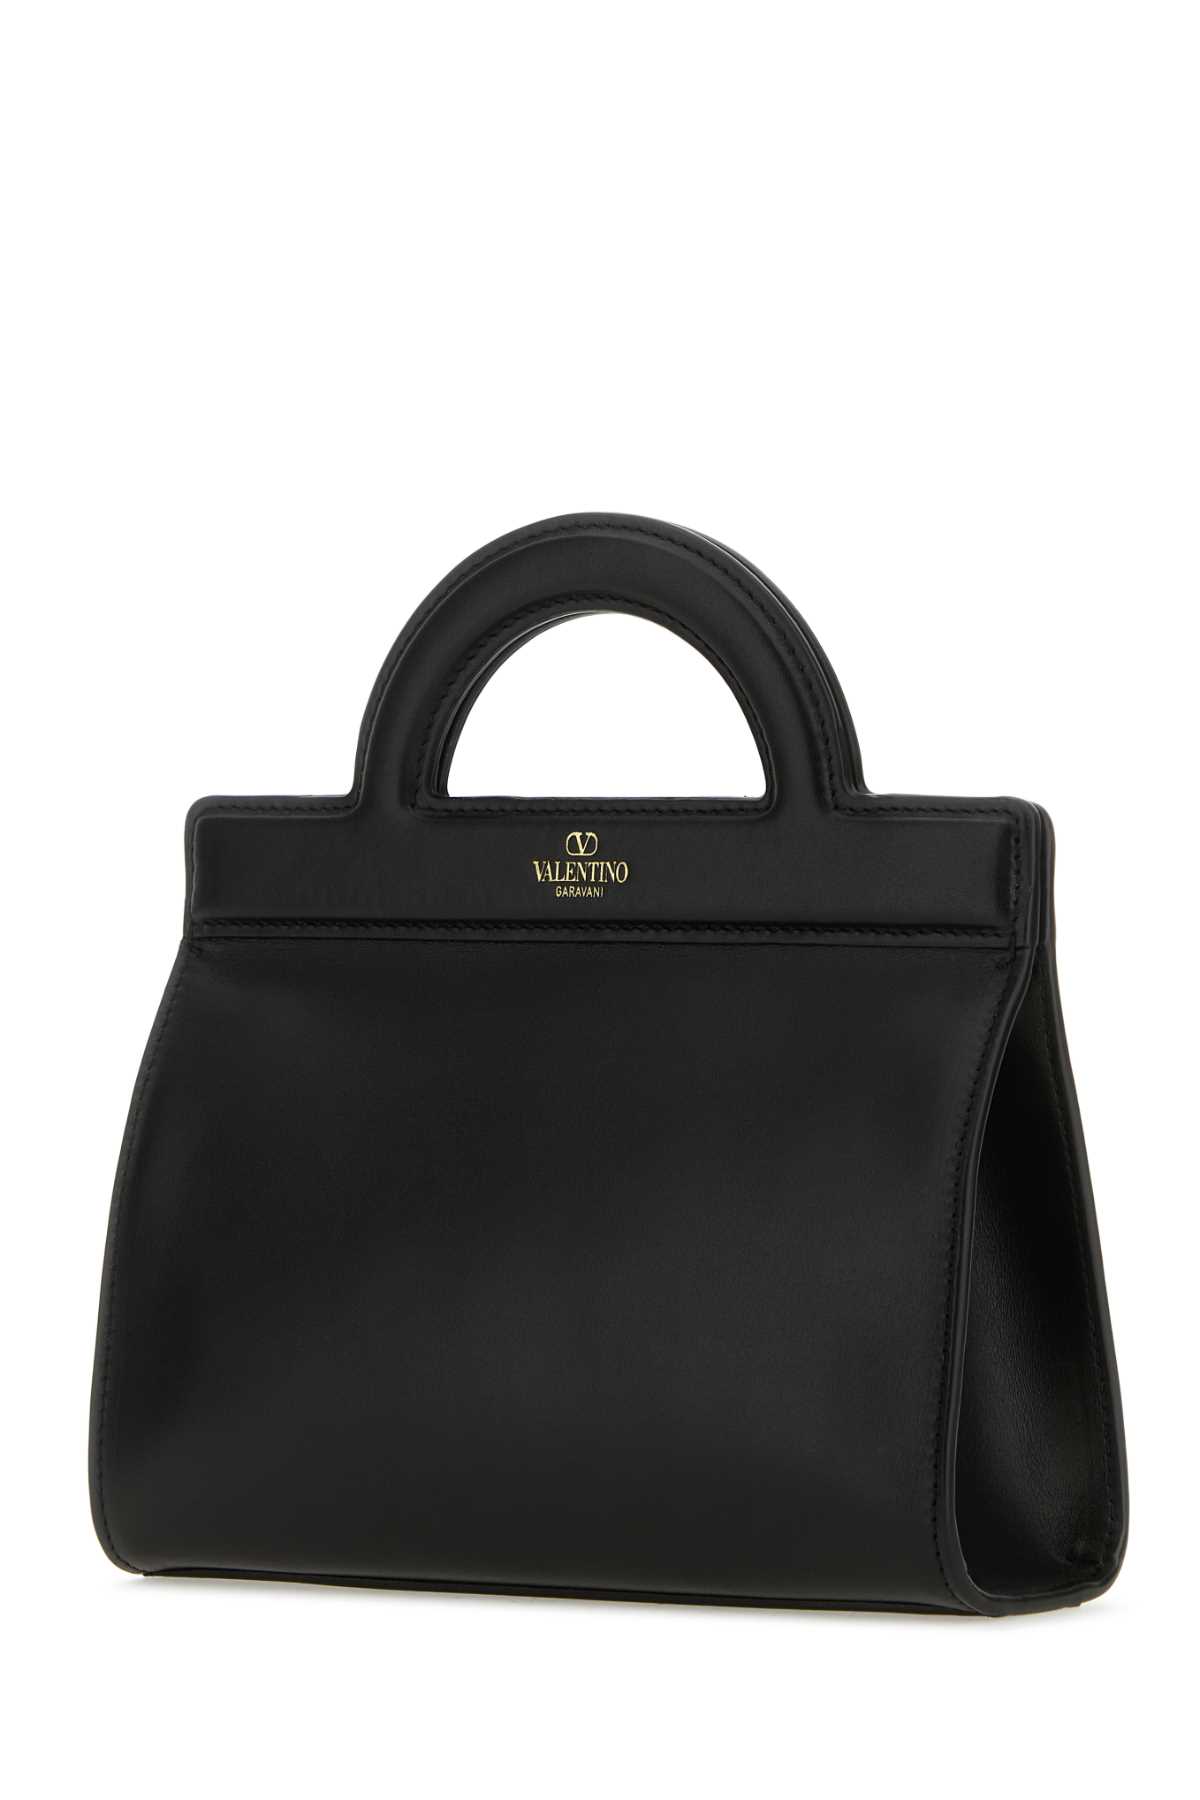 Valentino Garavani Black Leather Handbag In Nero